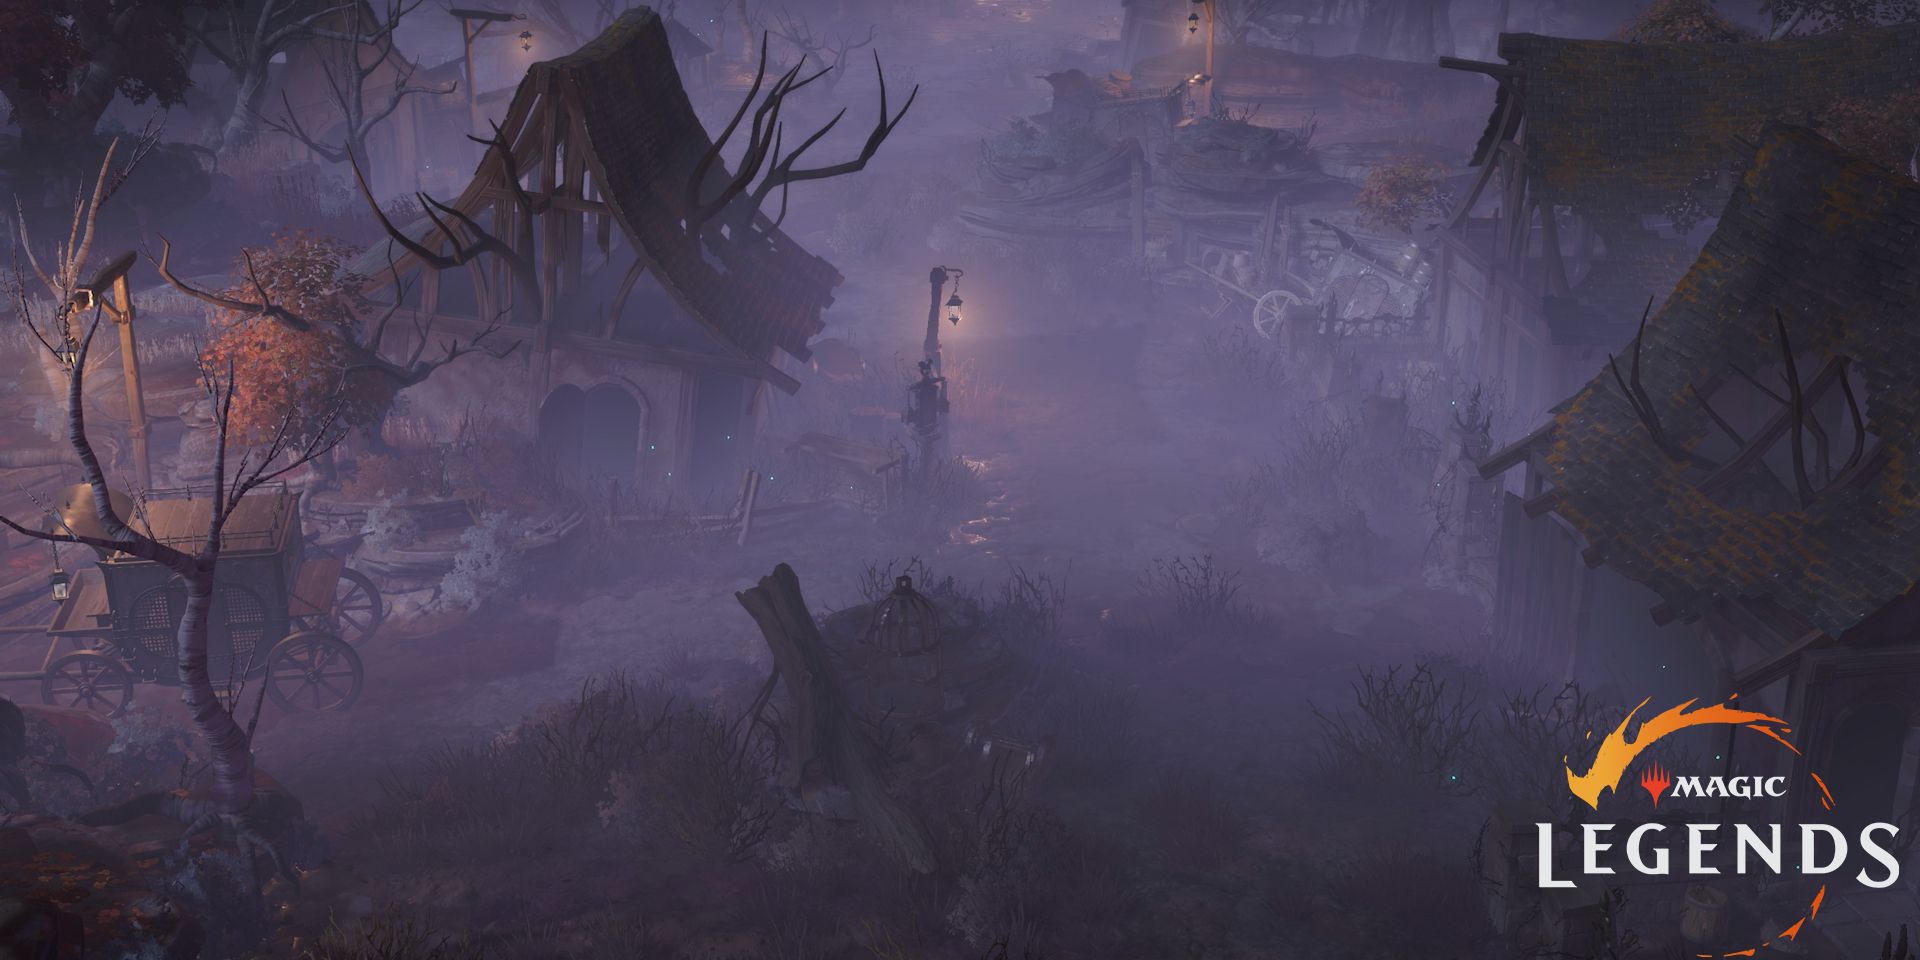 A village shrouded with purplish mist